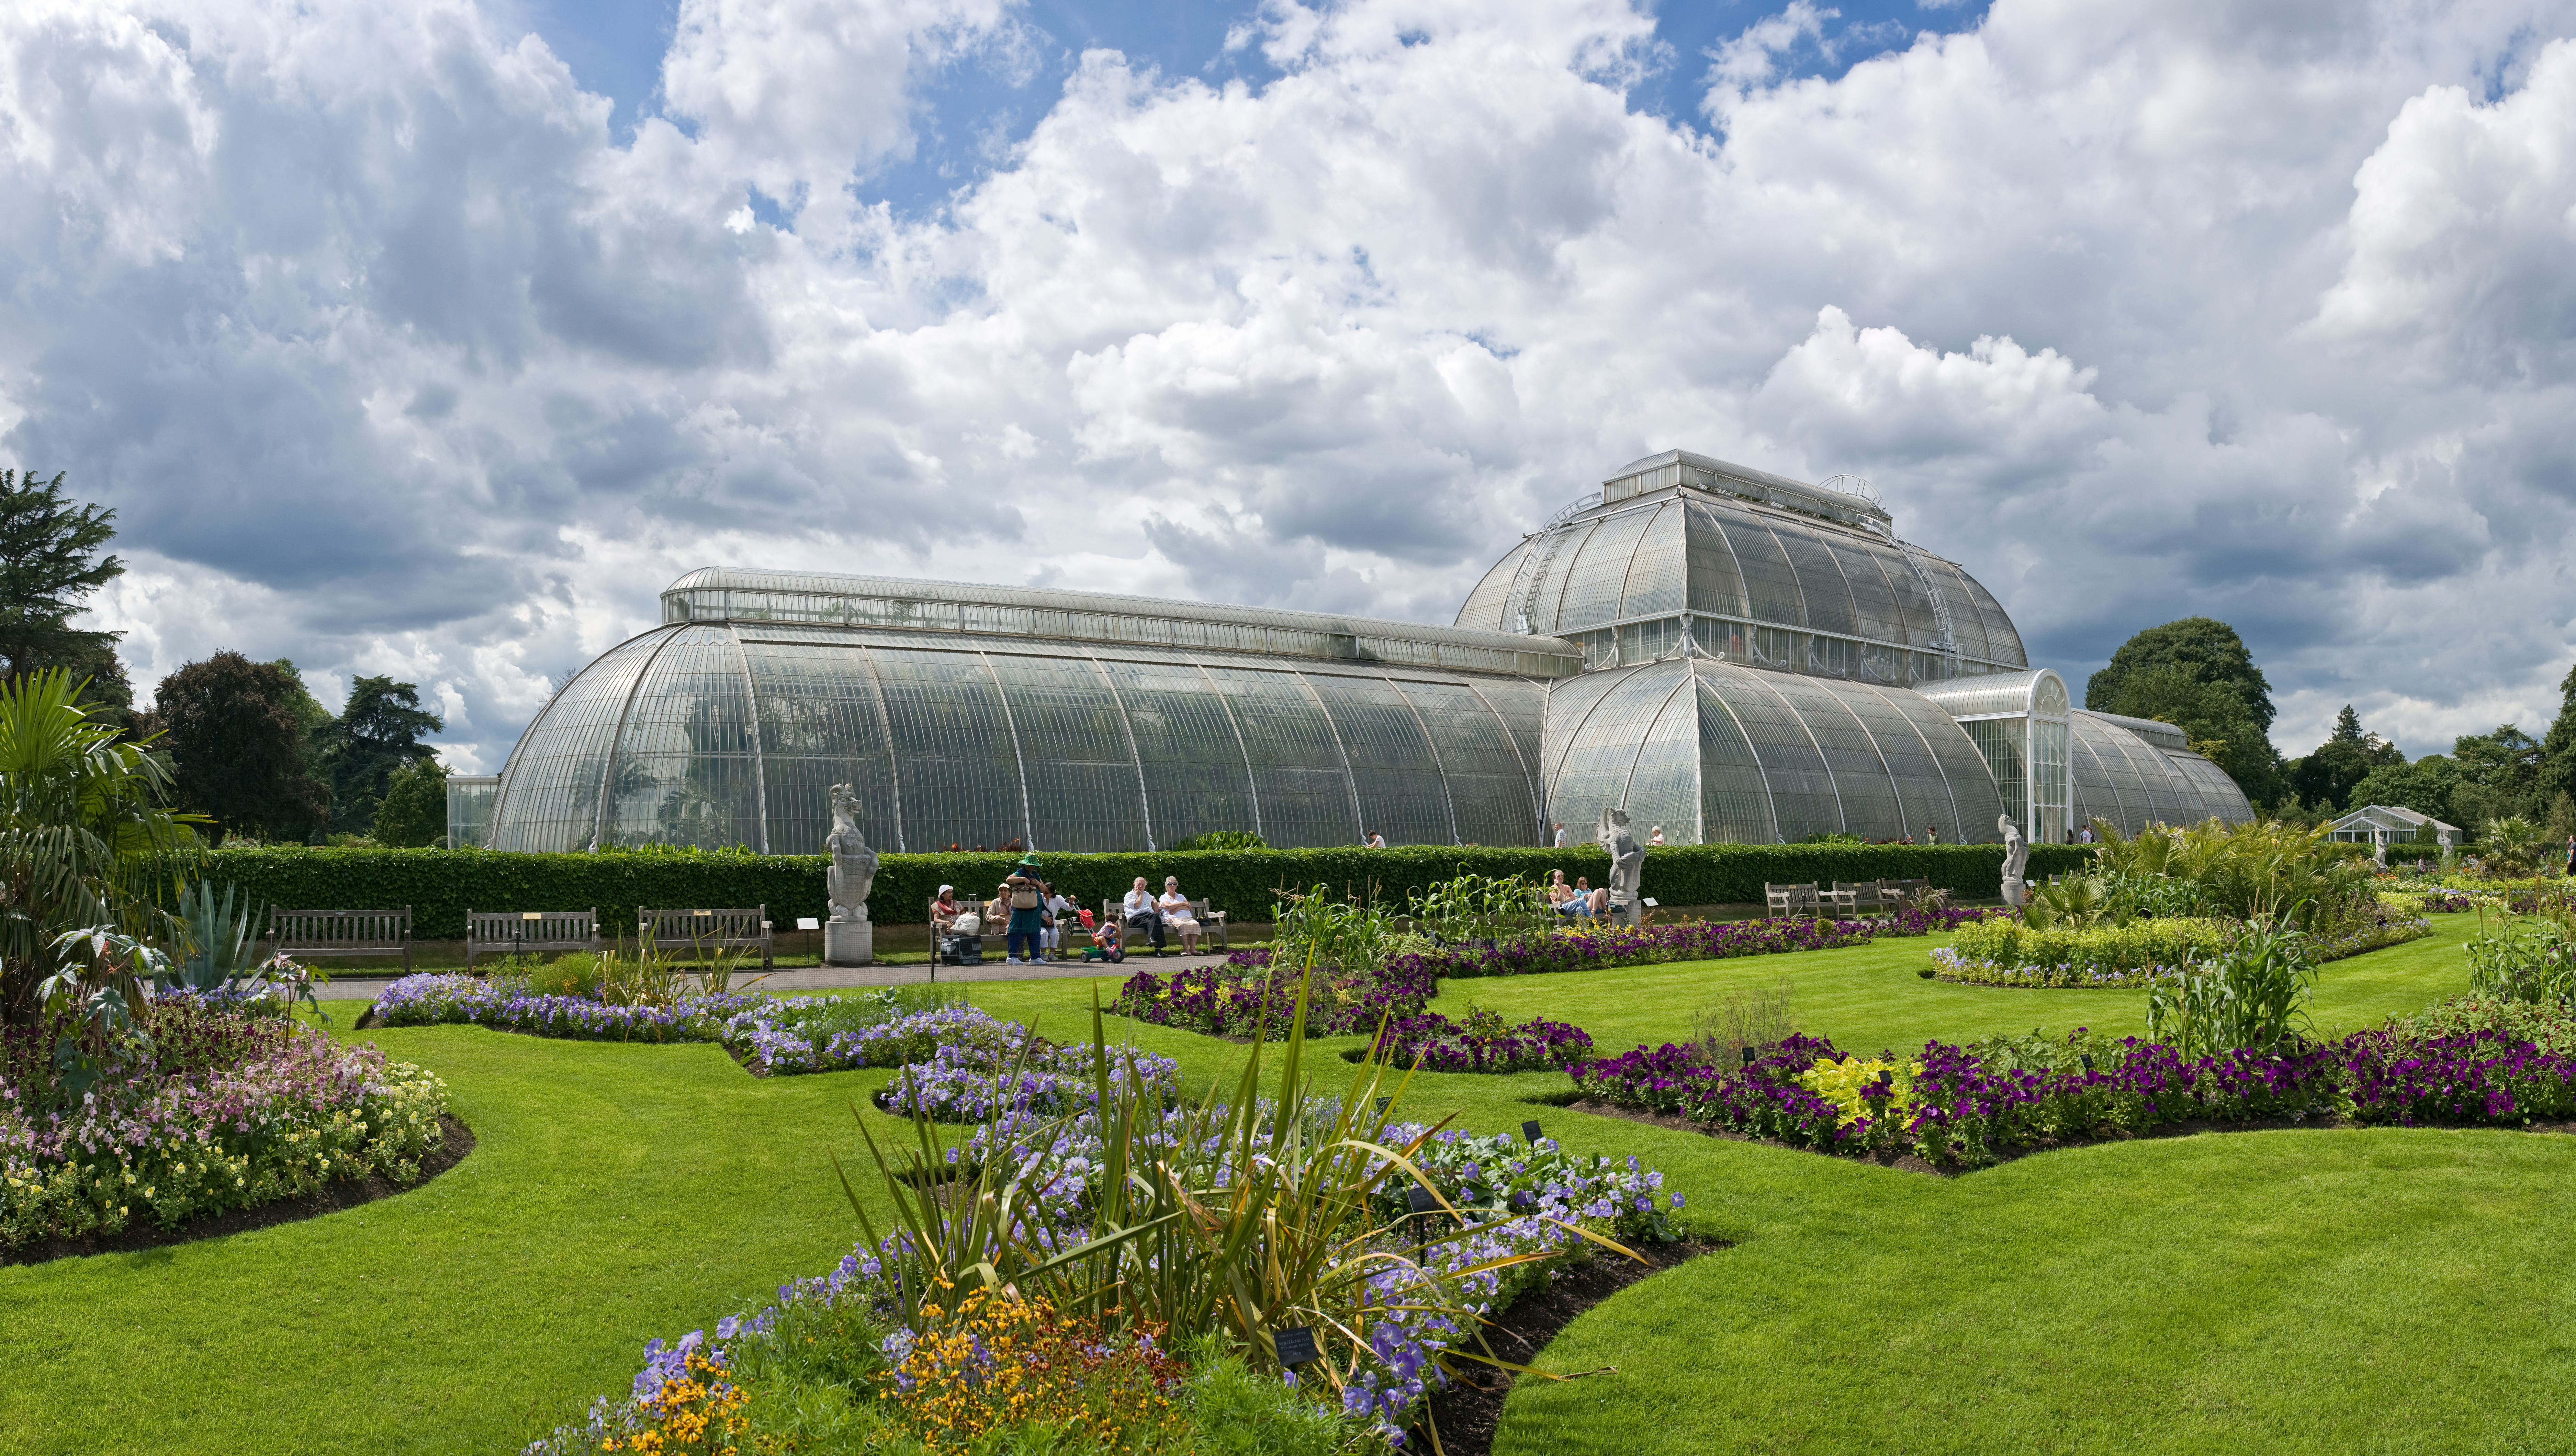 Botanical garden - Wikipedia